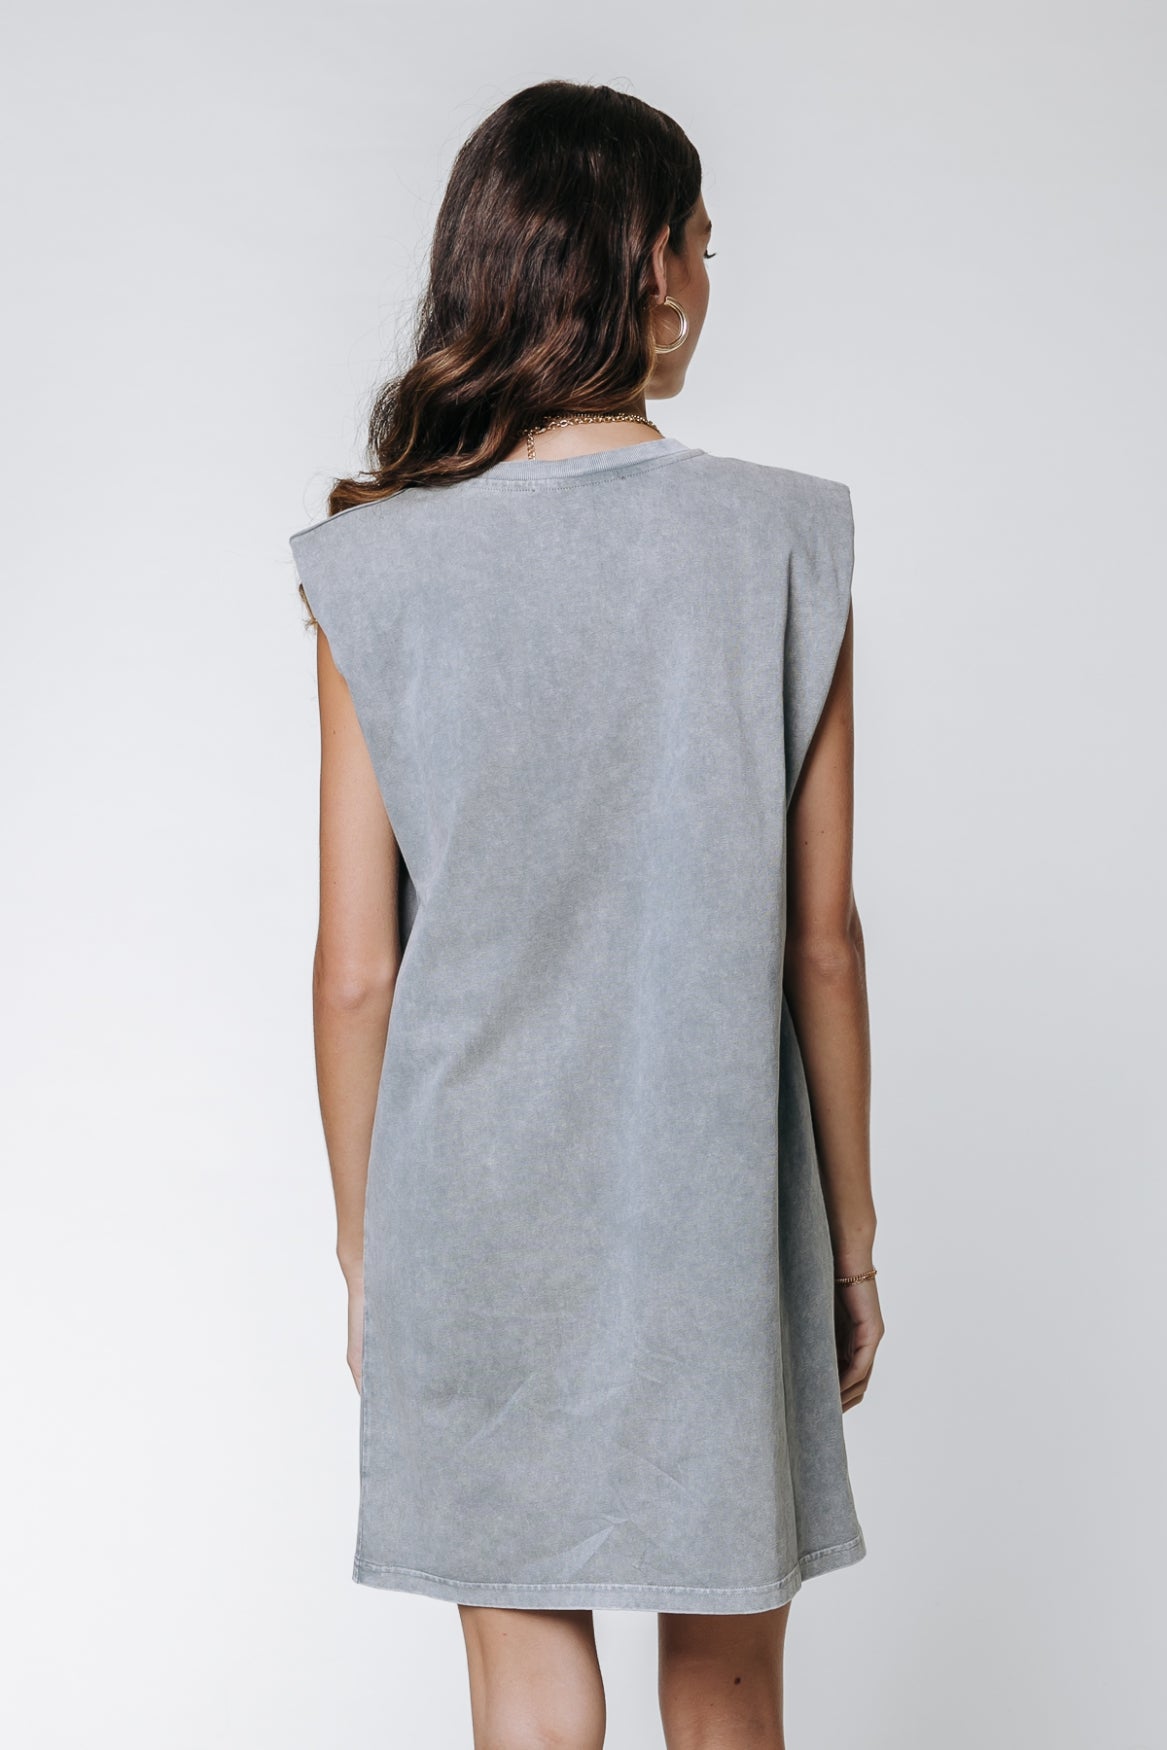 CR Summer Essence padded tee dress - grey